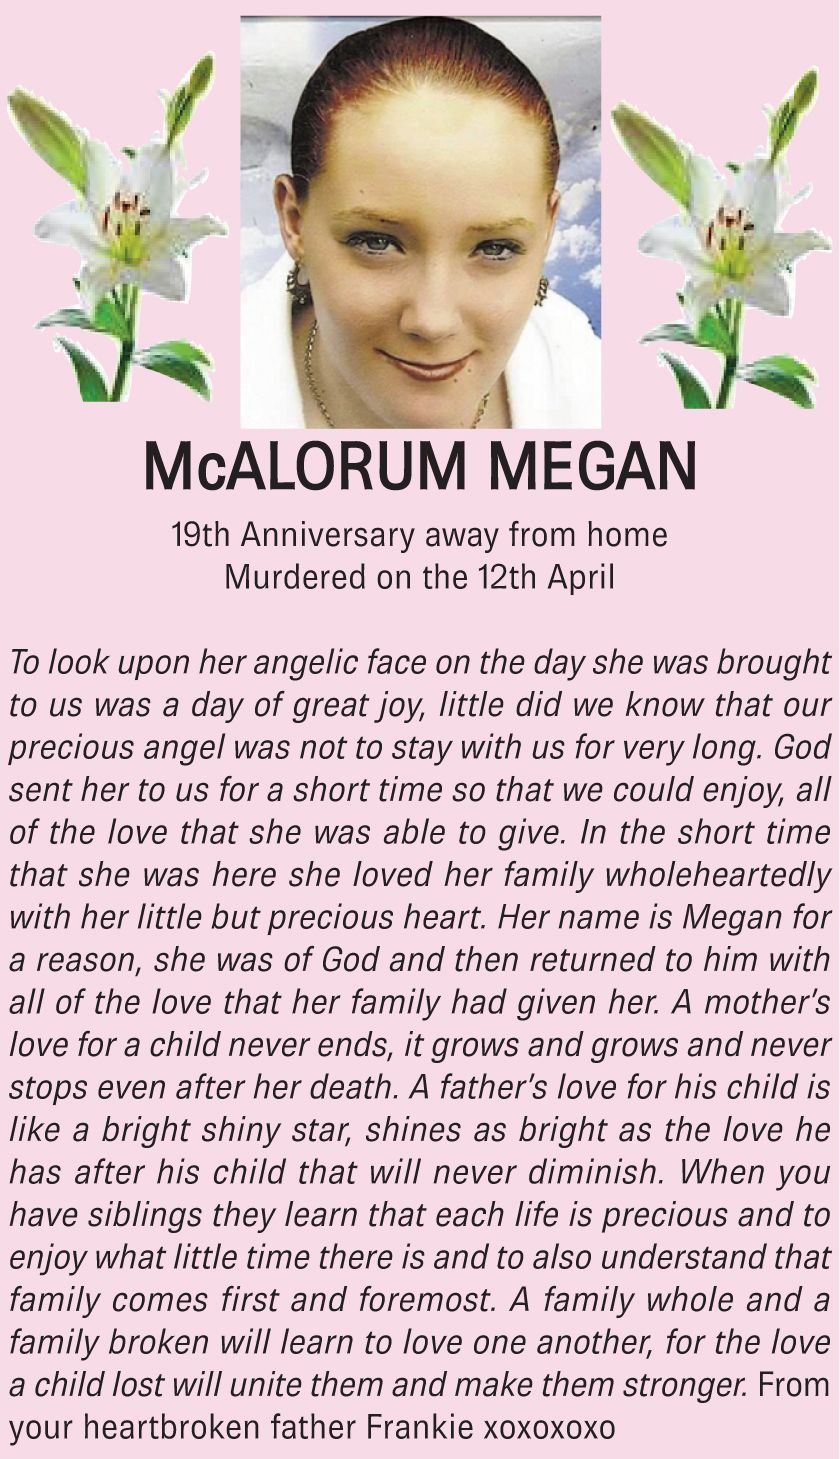 Megan mcalorum new